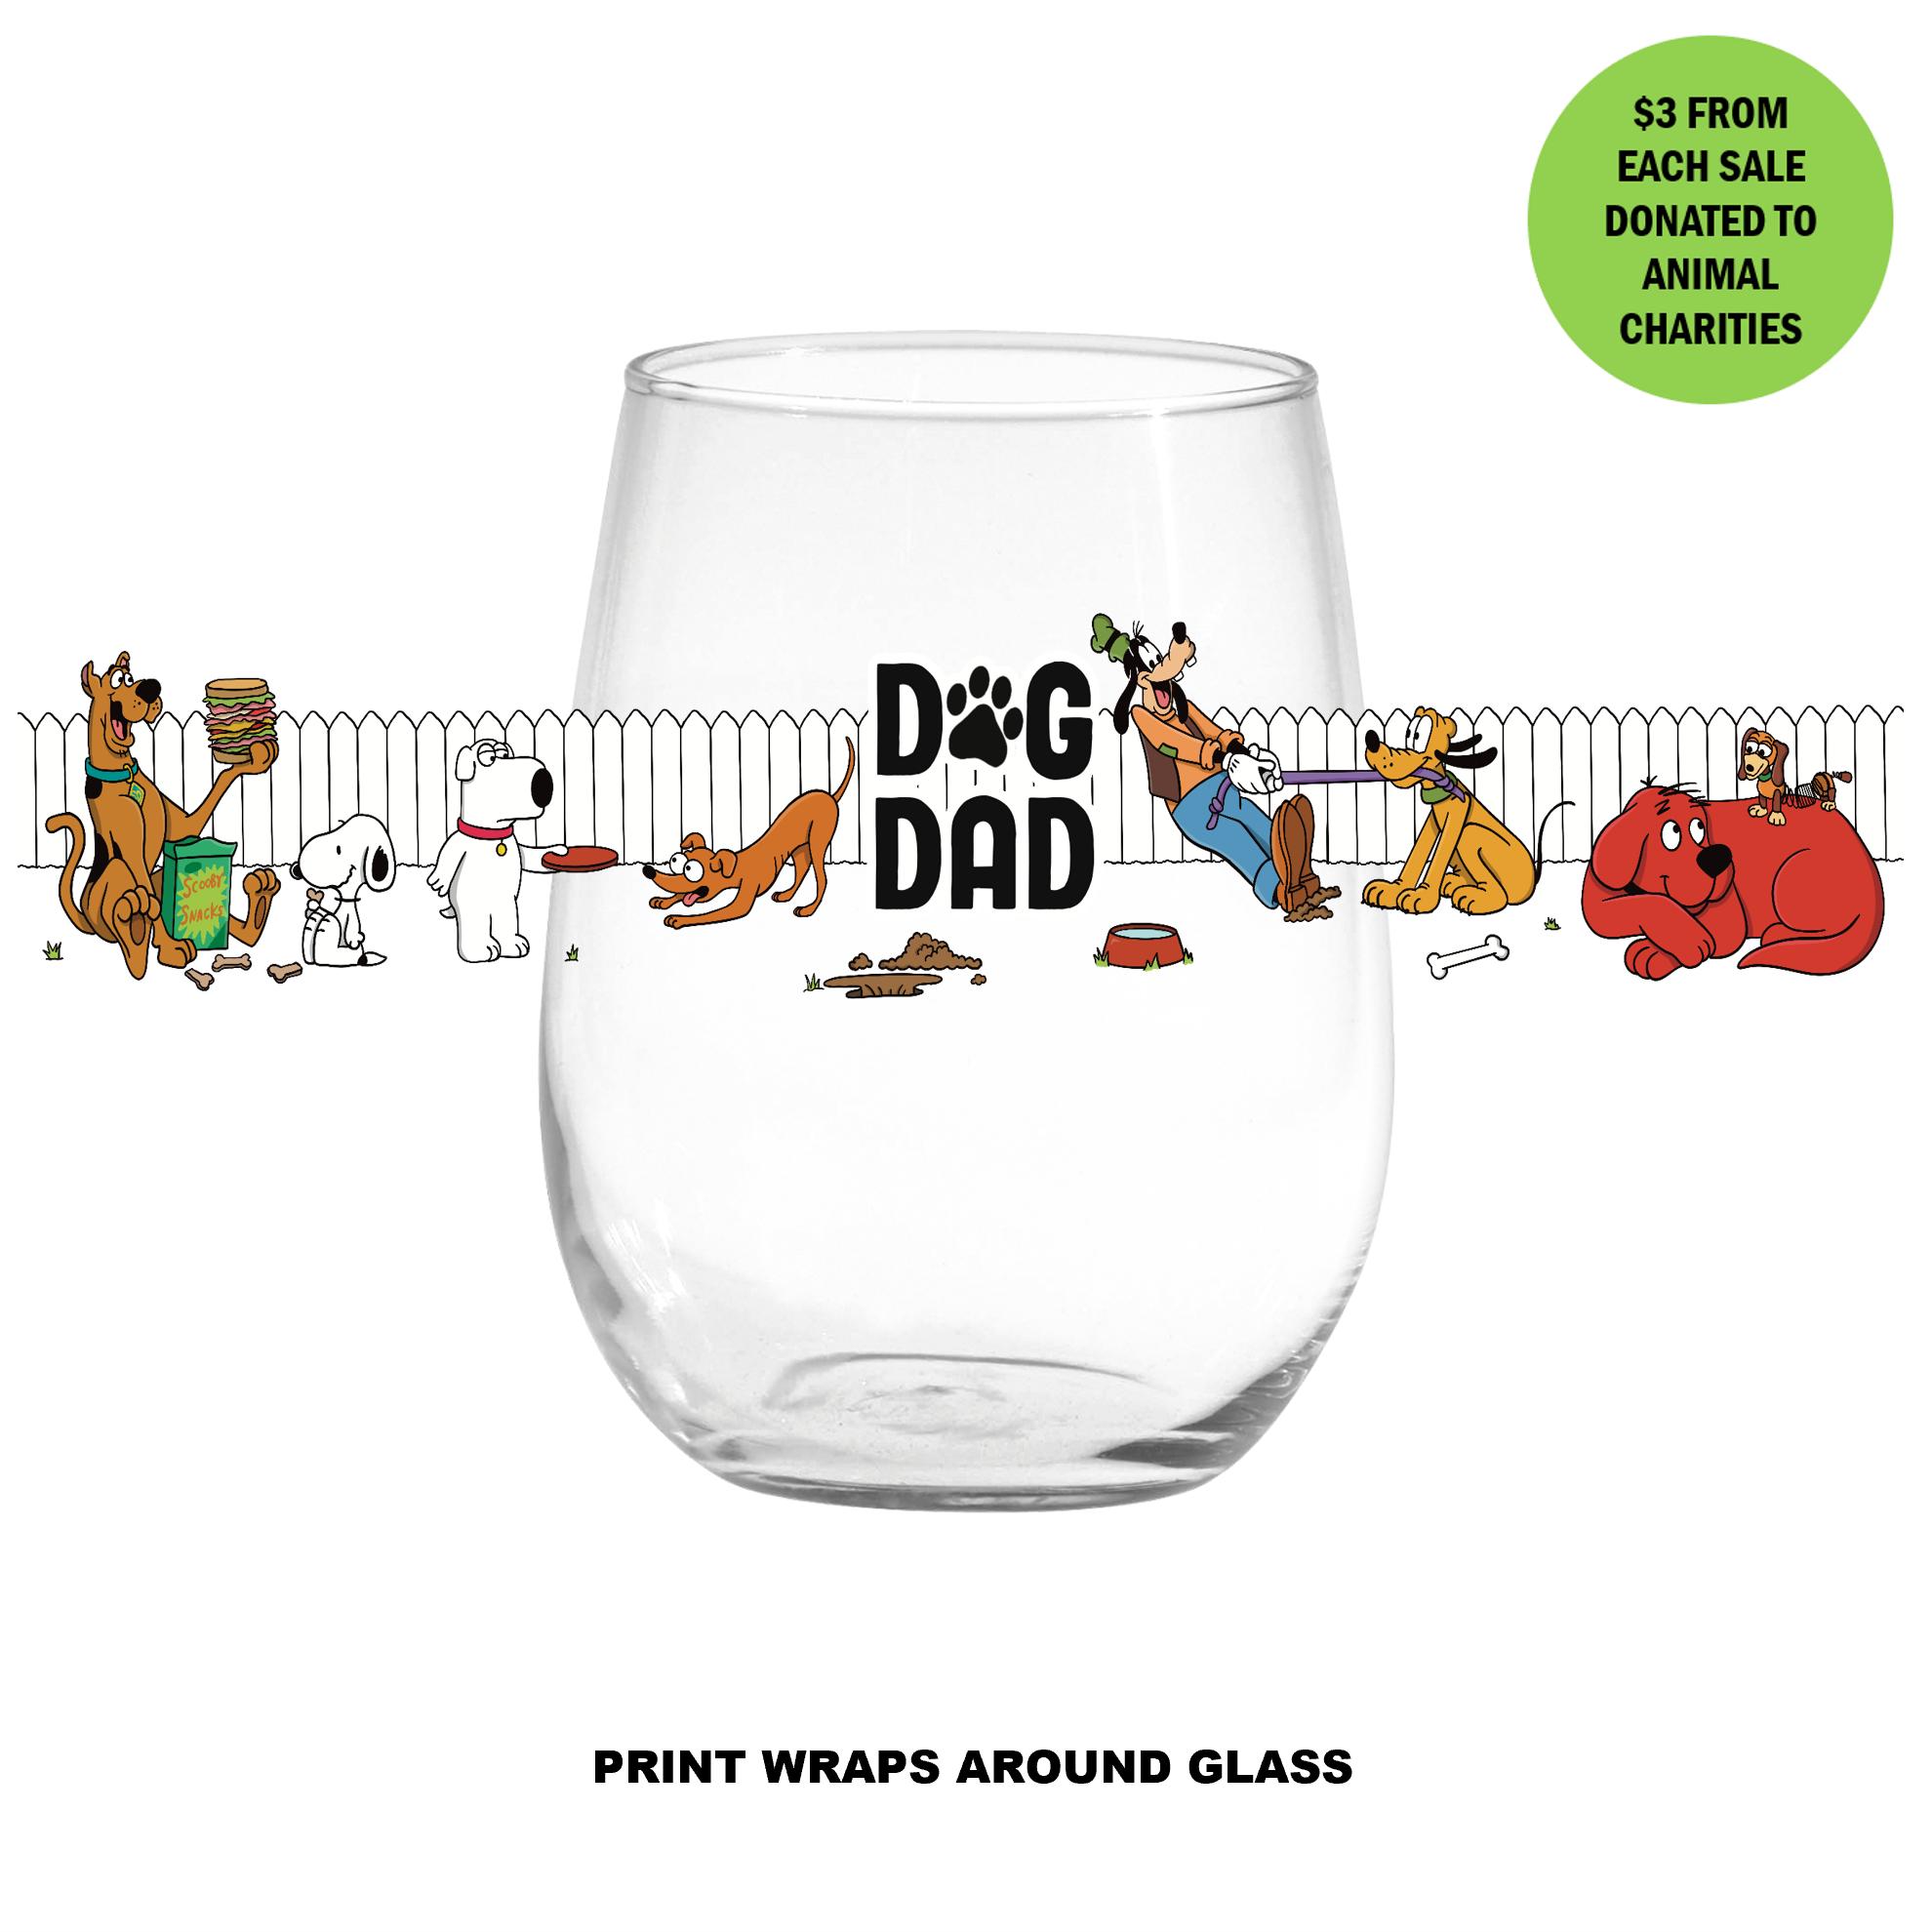 Single Product Image "Dog Dad" 16oz vina glass